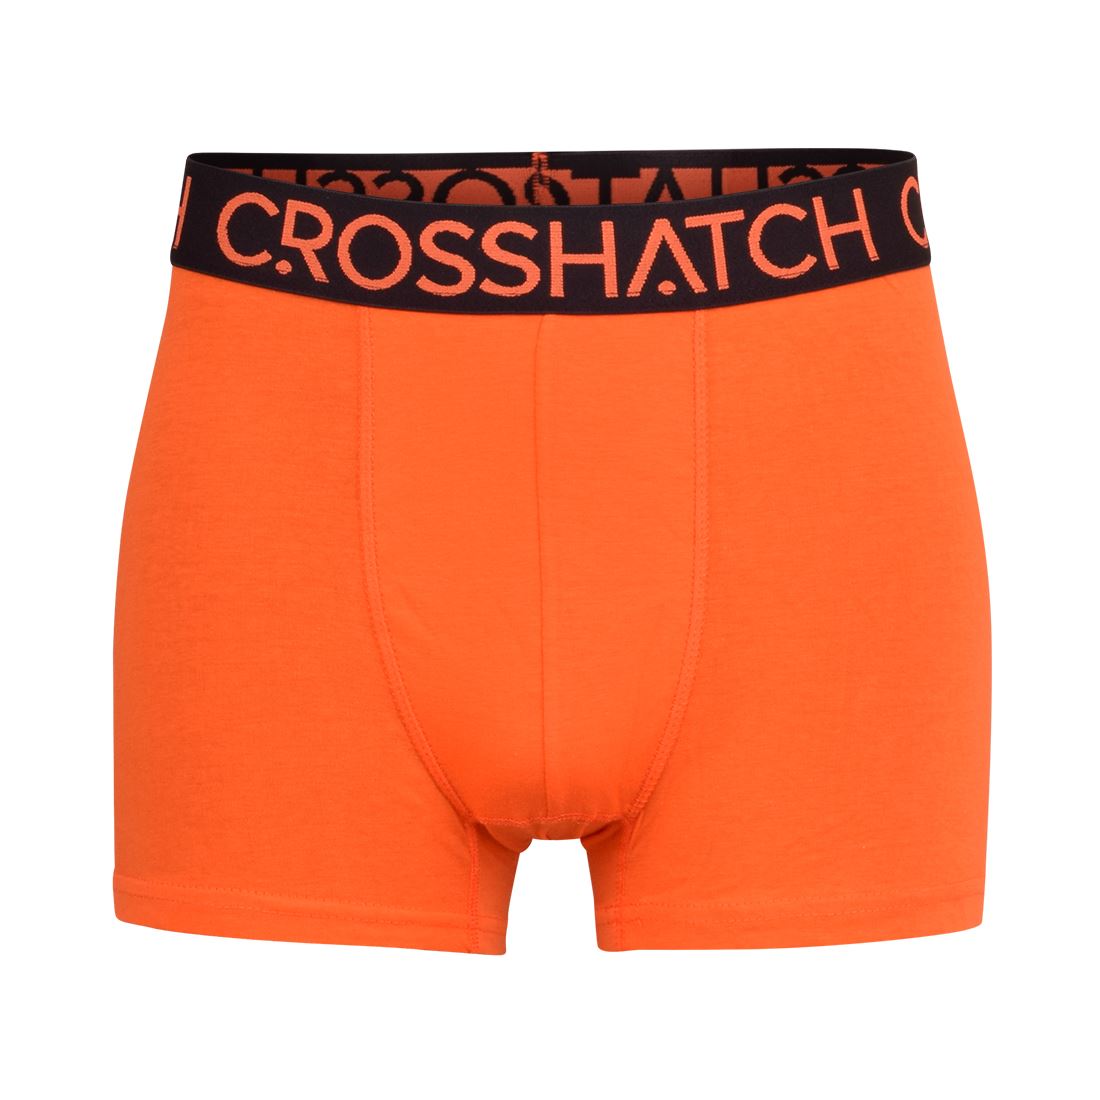 Crosshatch 5 Pack Mens Designer Boxer Shorts Boxers Underwear Trunks Gift Set